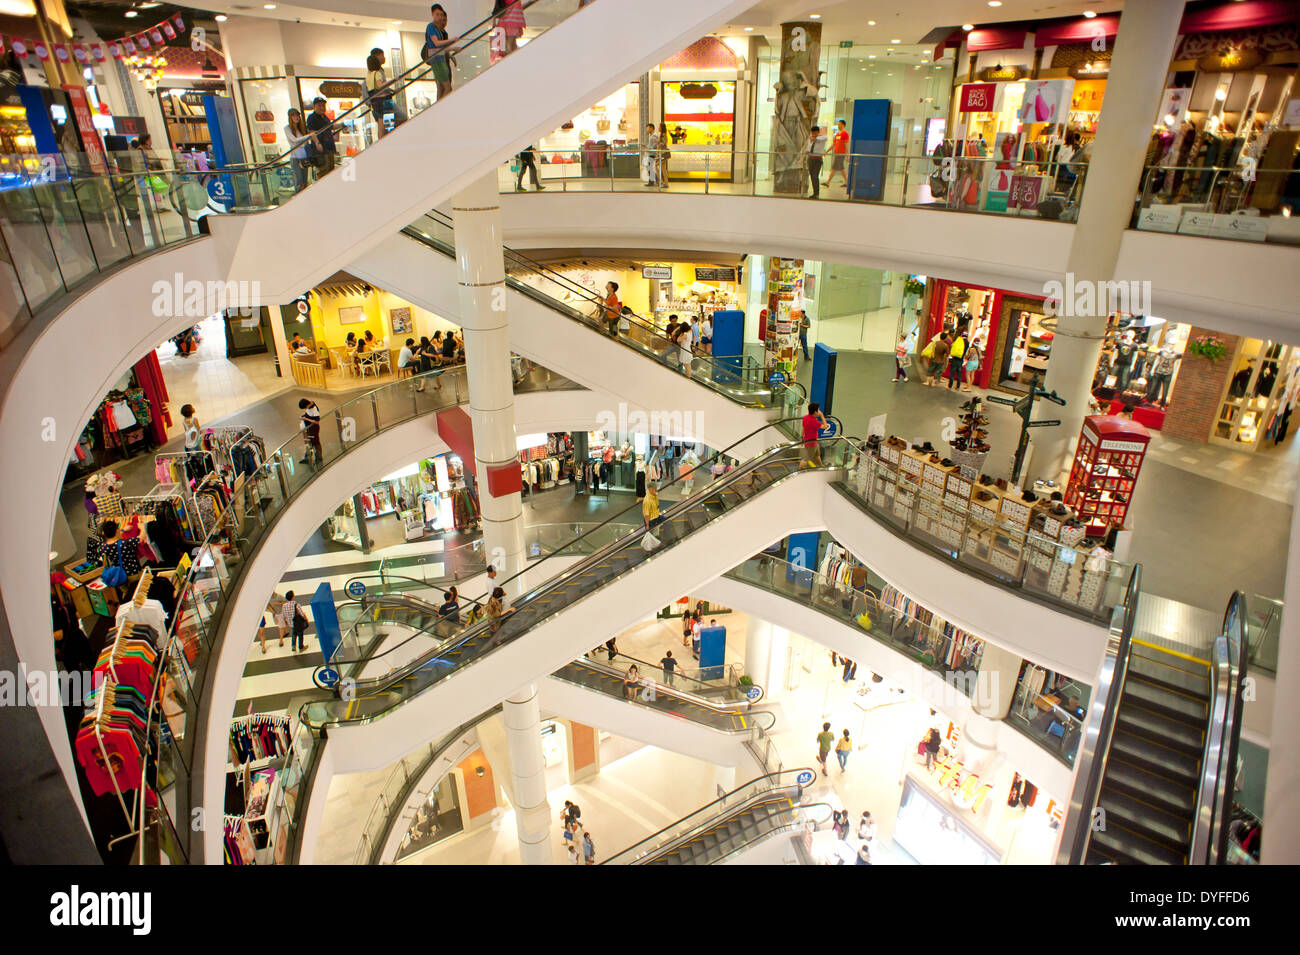 Bangkok, Thailand - Shopping mall Siam Paragon interior Stock Photo - Alamy